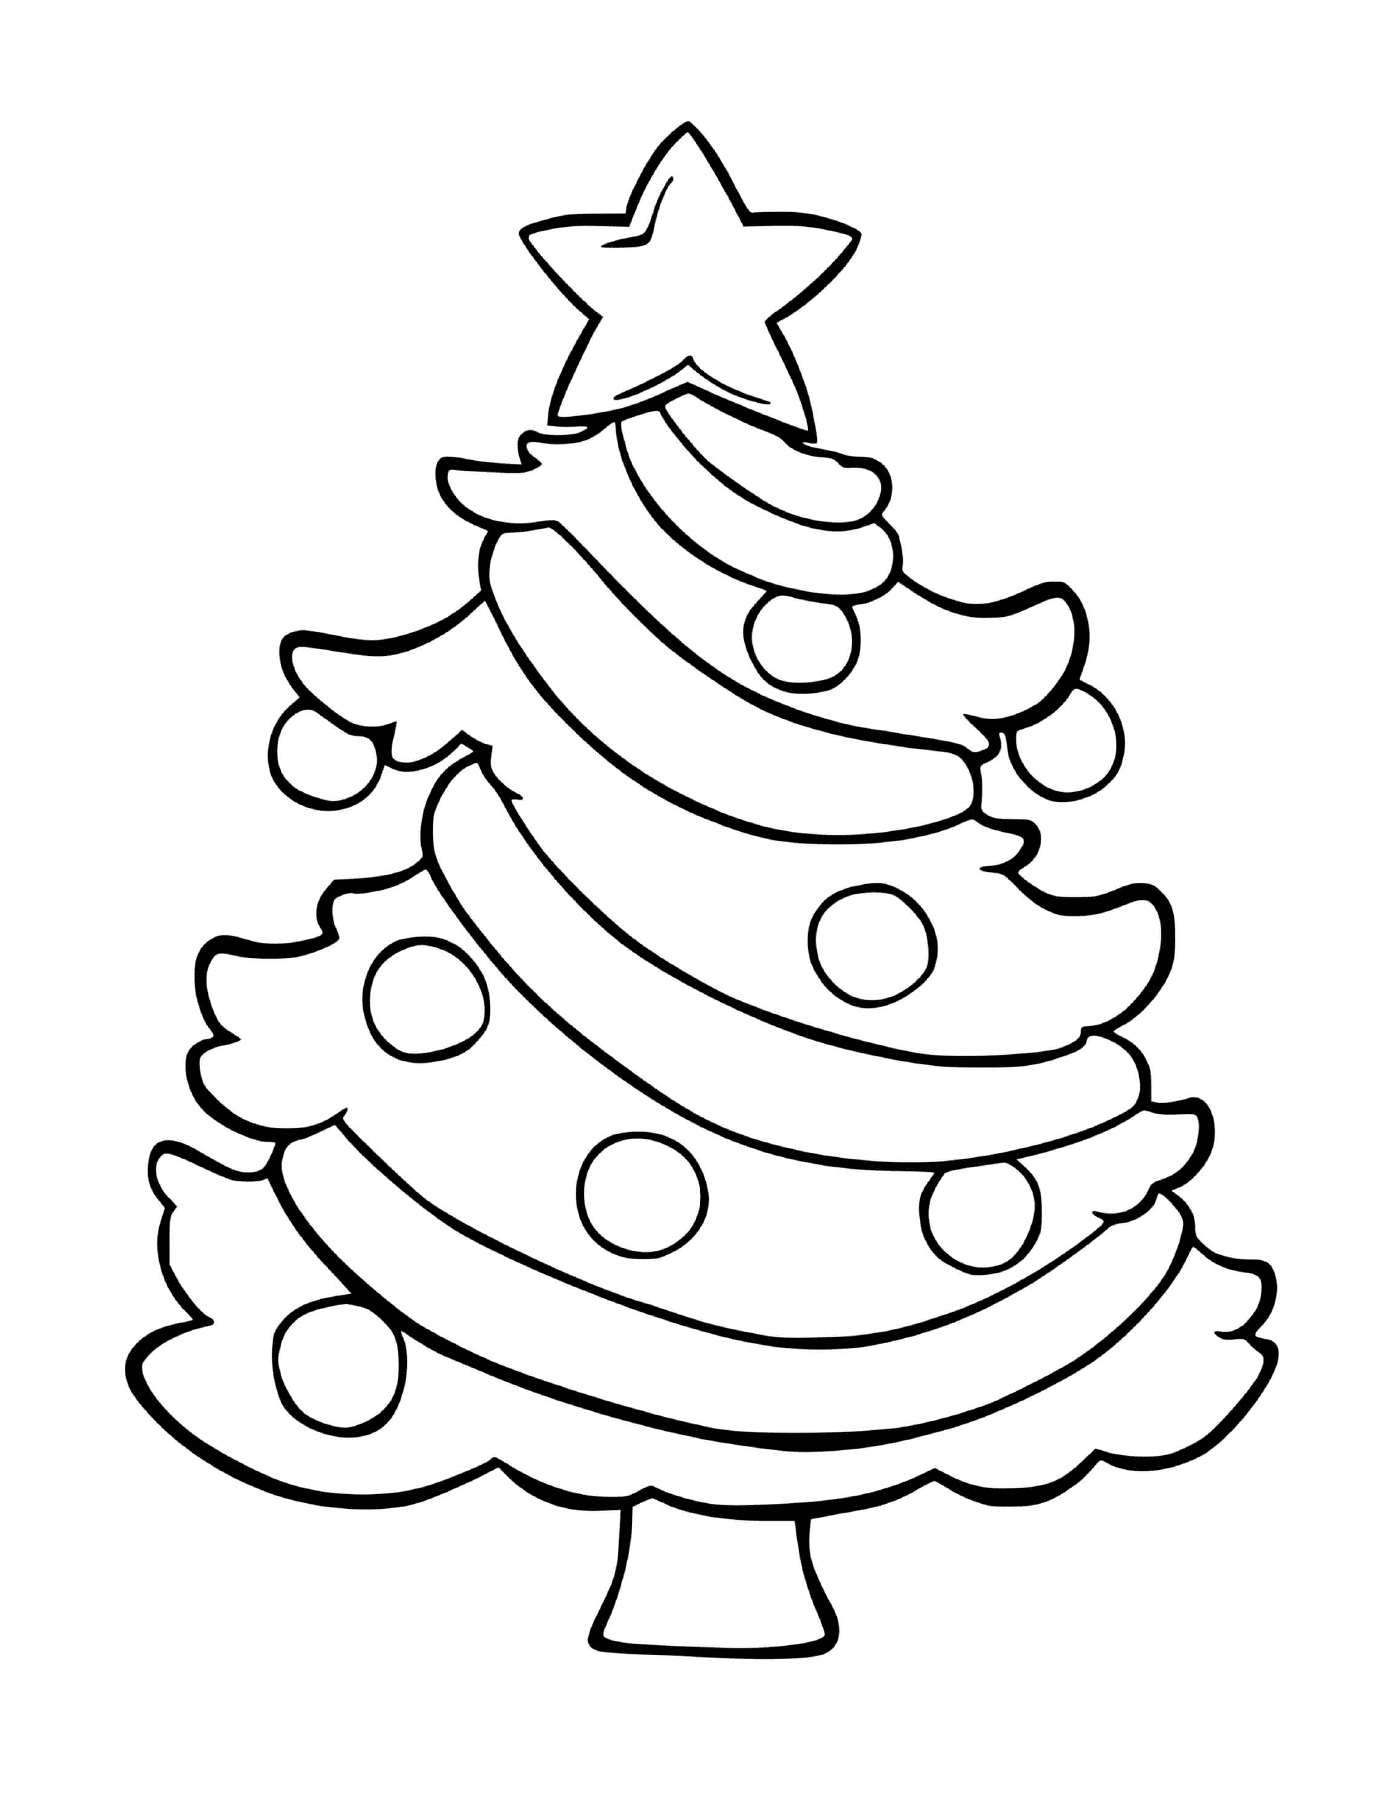  Christmas tree with garlands and Christmas balls 